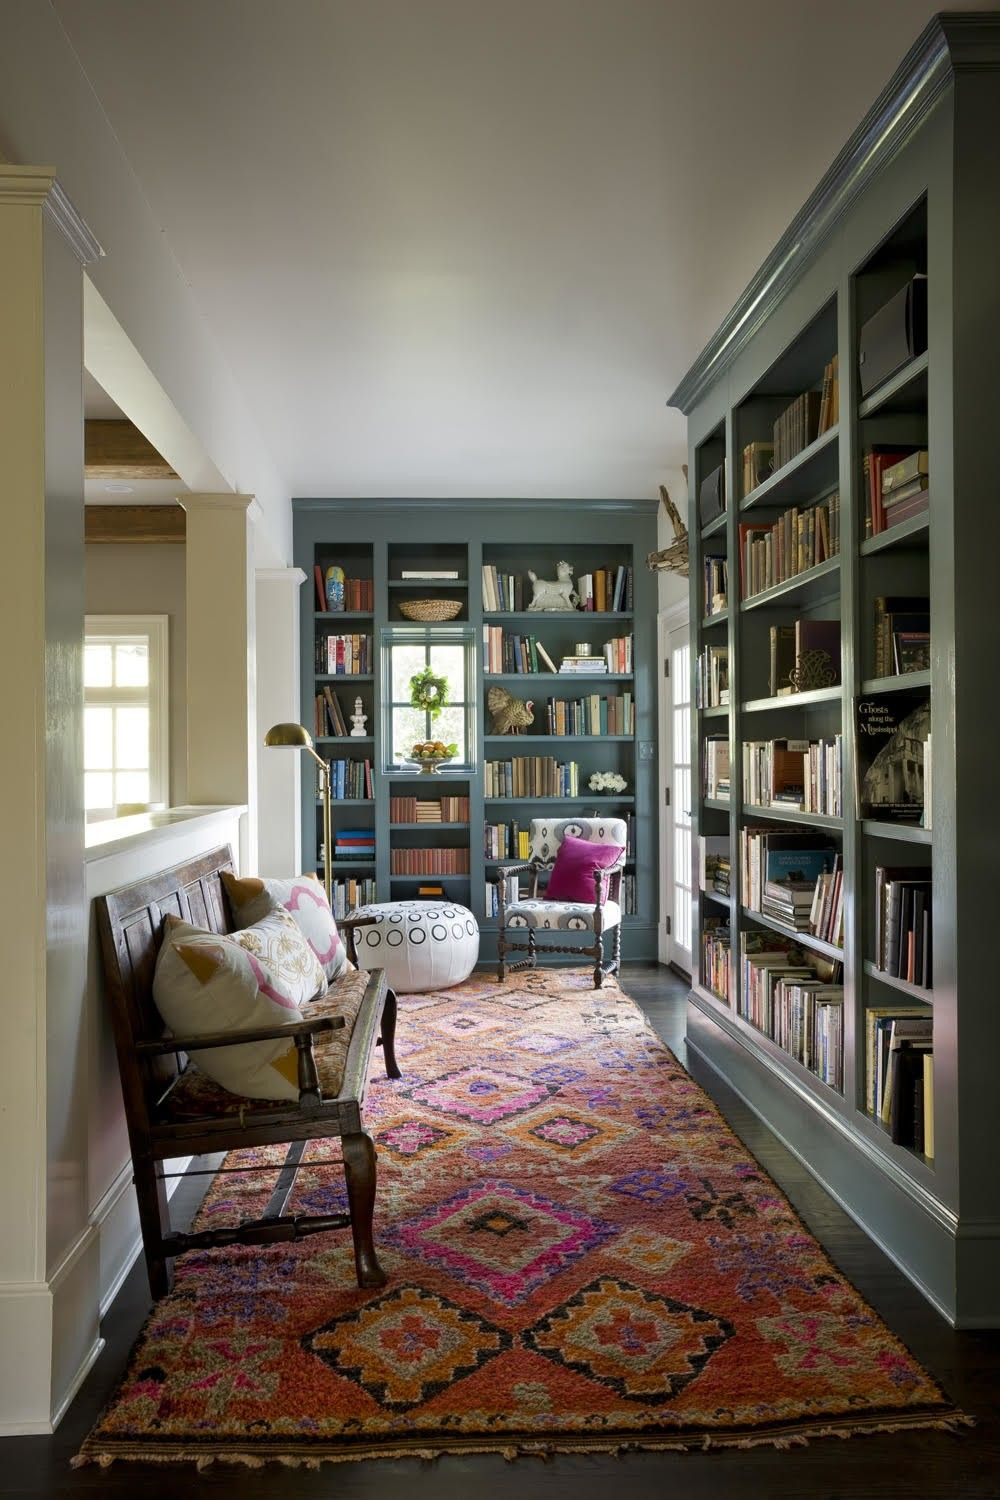 Built In Bookshelves Painted Cornflower Blue Designed regarding sizing 1000 X 1500